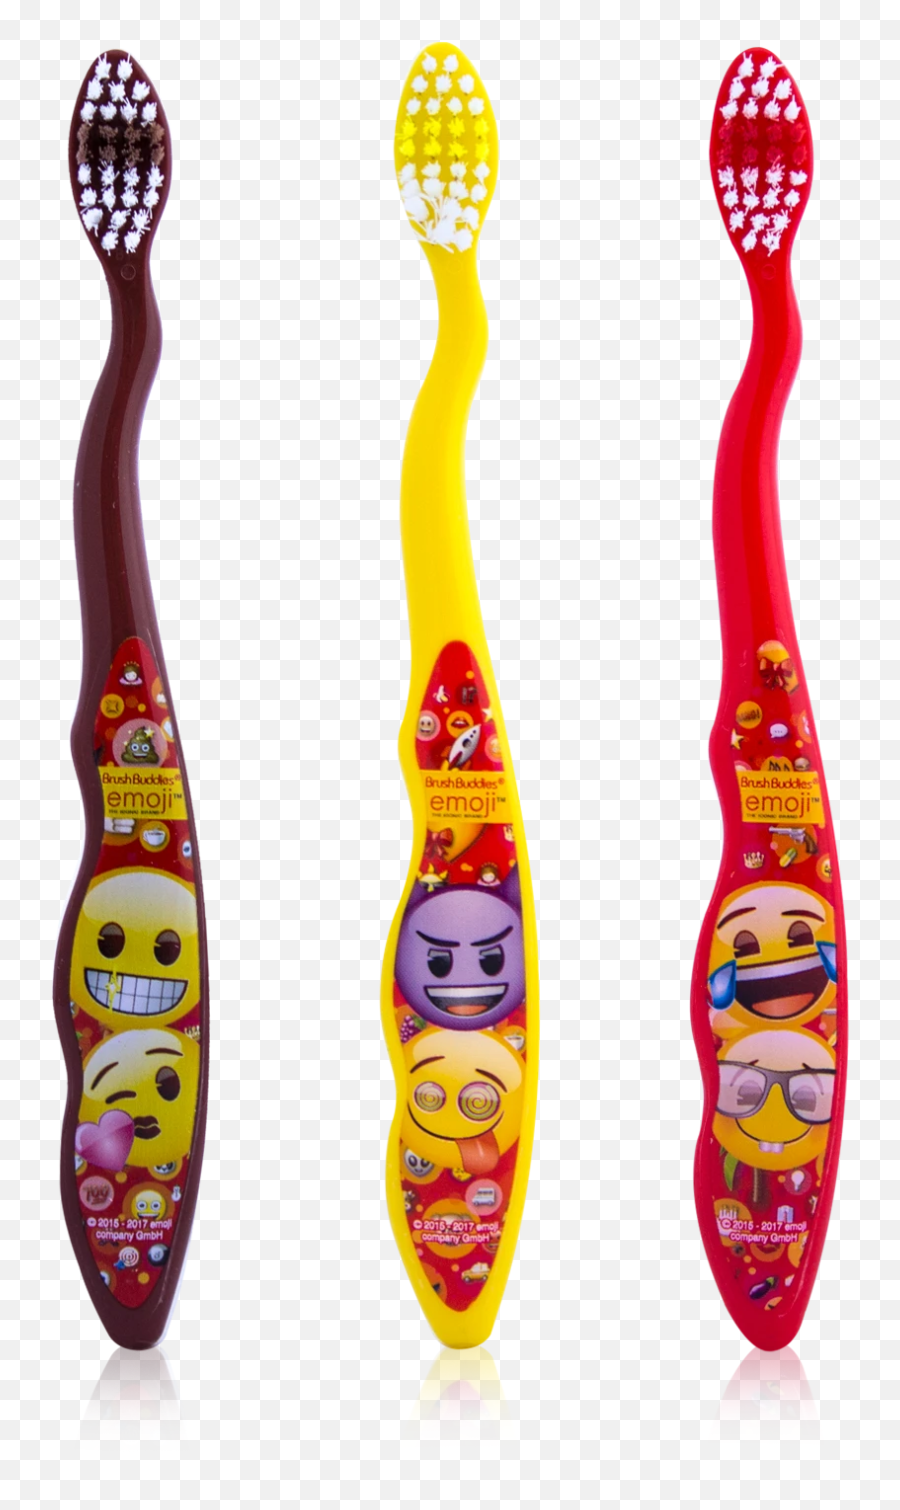 Brush Buddies Emoji Toothbrush 3 Pack - Cartoon,Kung Fu Emoji